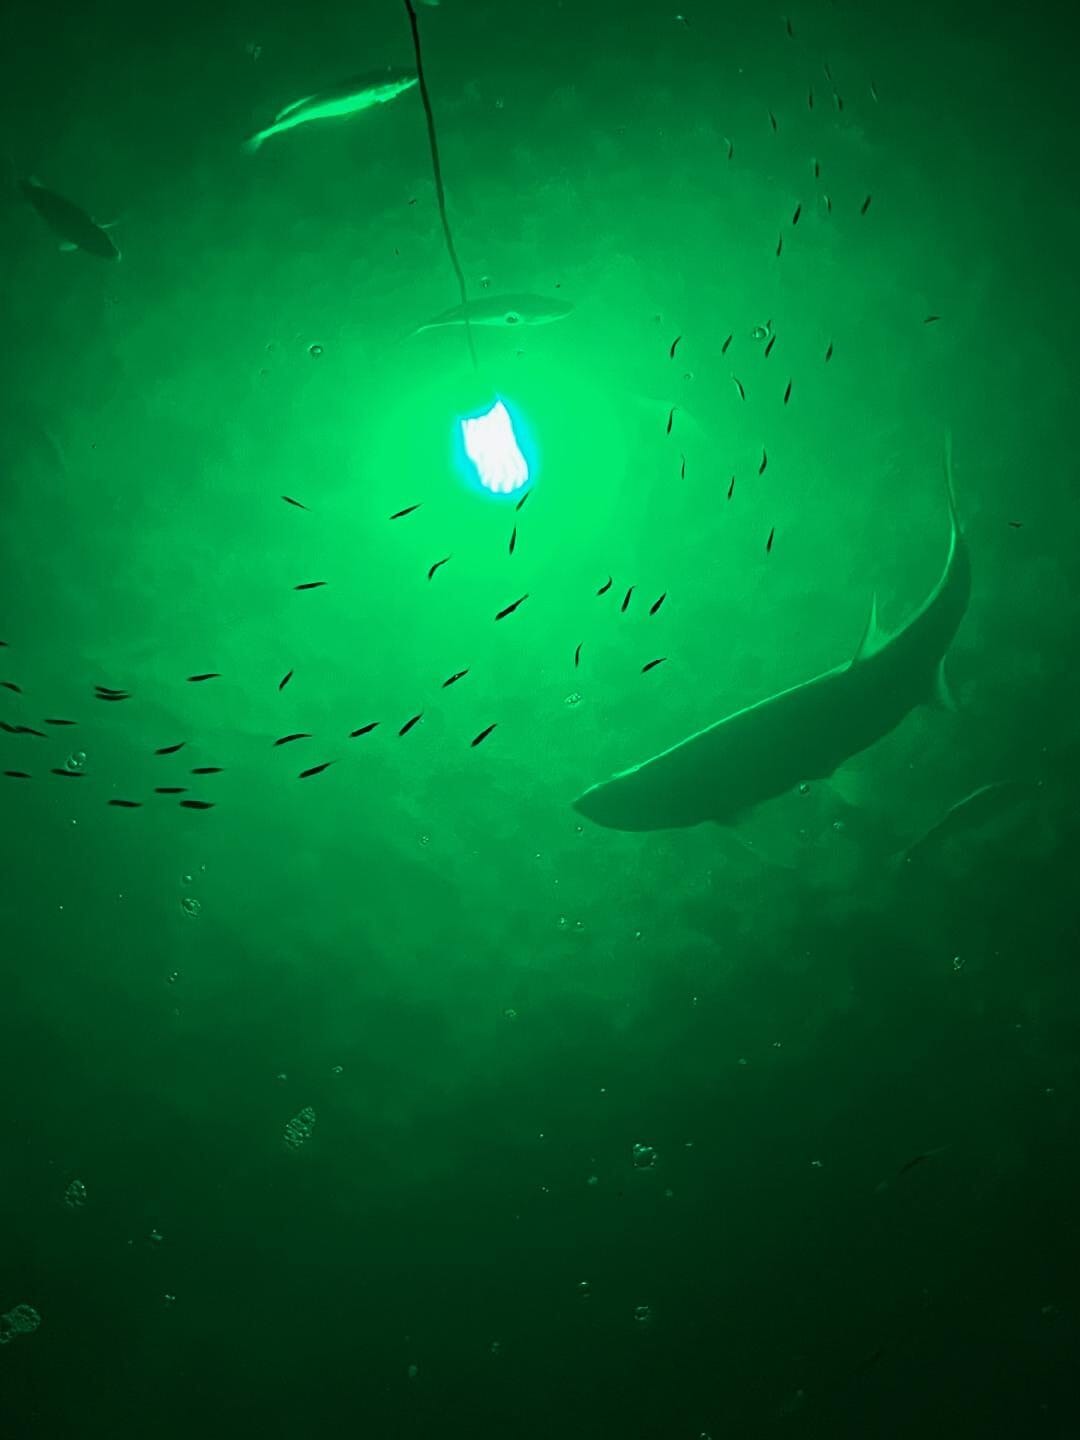 Green Blob Outdoors Green Underwater Fishing LED Light 15000 Lumens 12  India